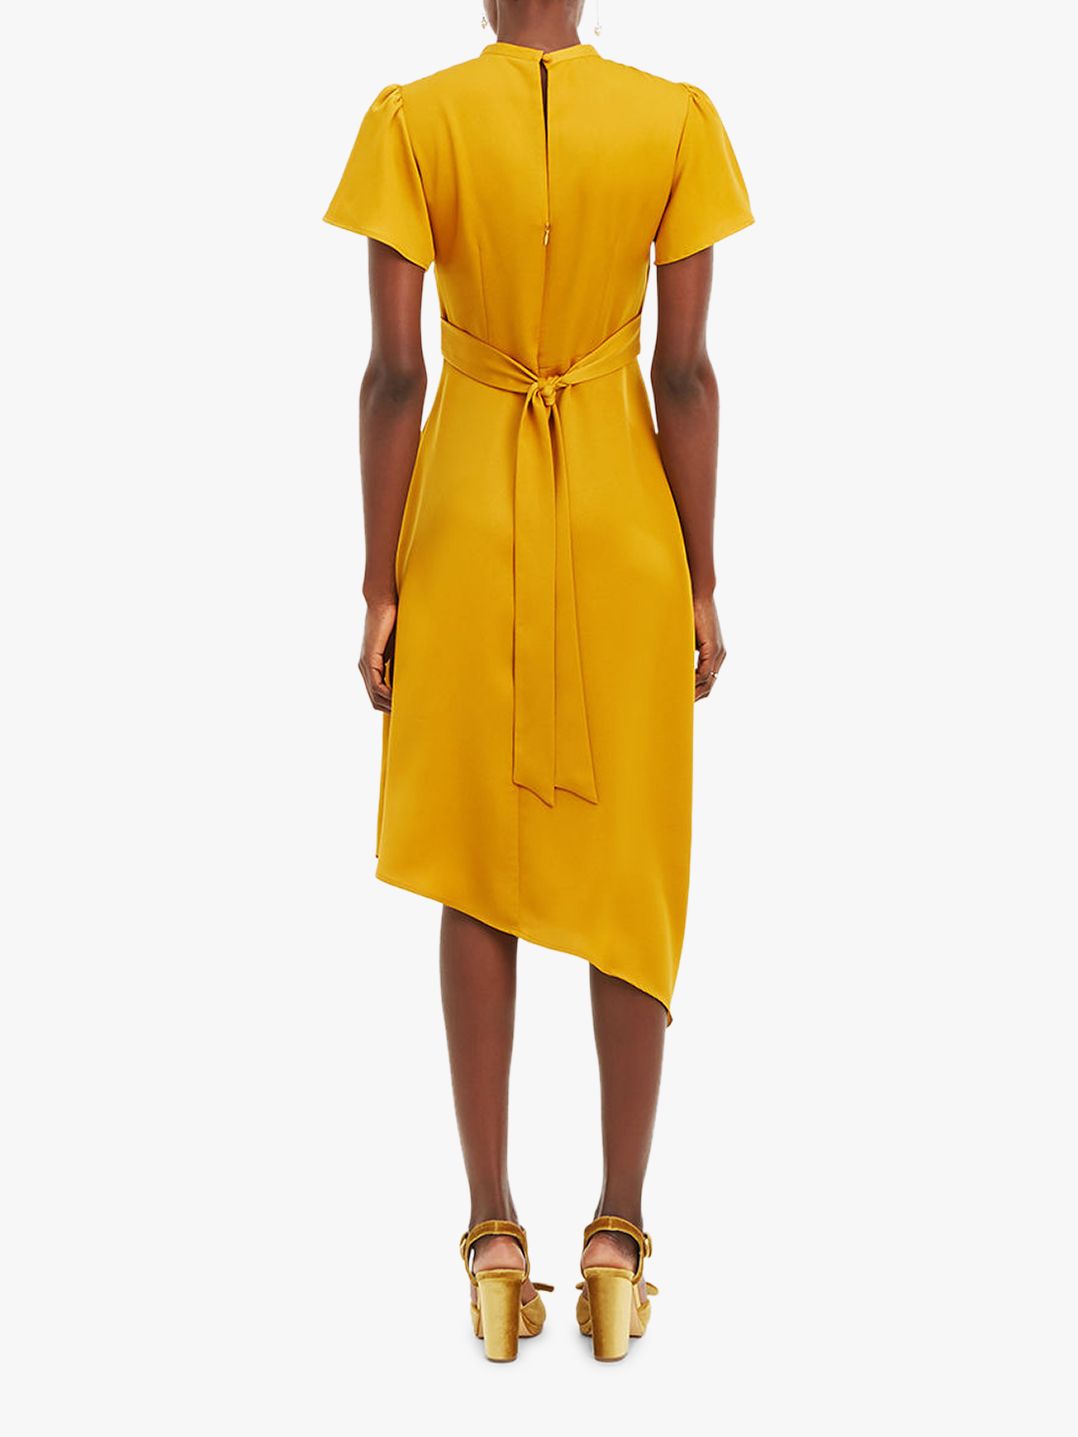 oasis yellow dress